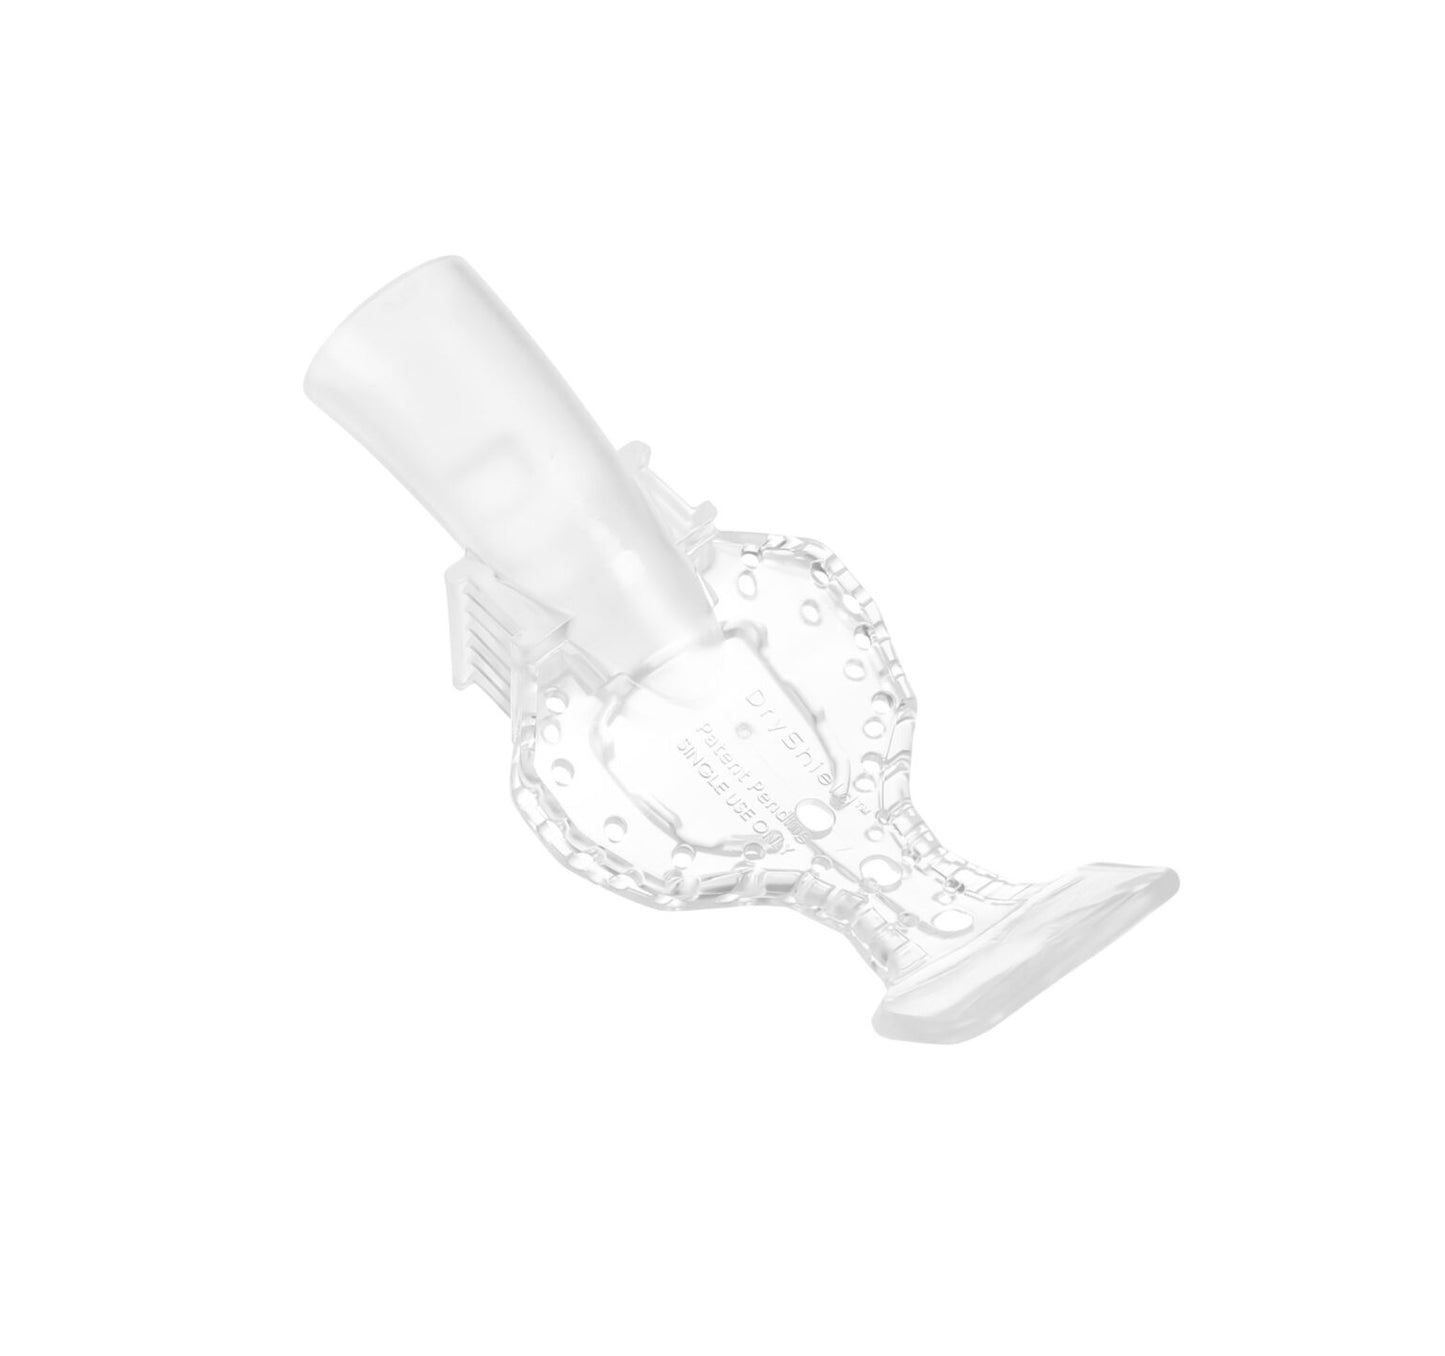 Solmetex Dryshield Single-Use Mouthpiece